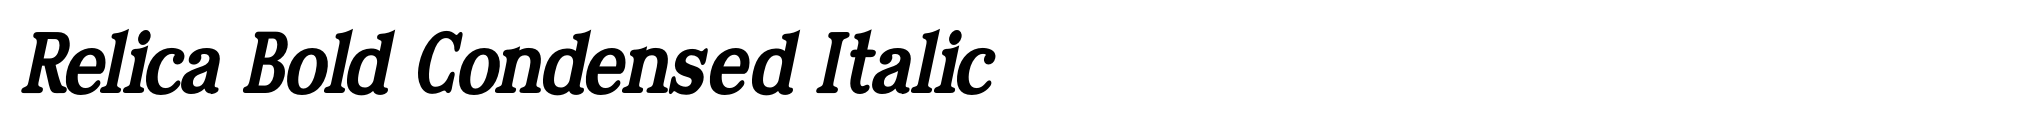 Relica Bold Condensed Italic image